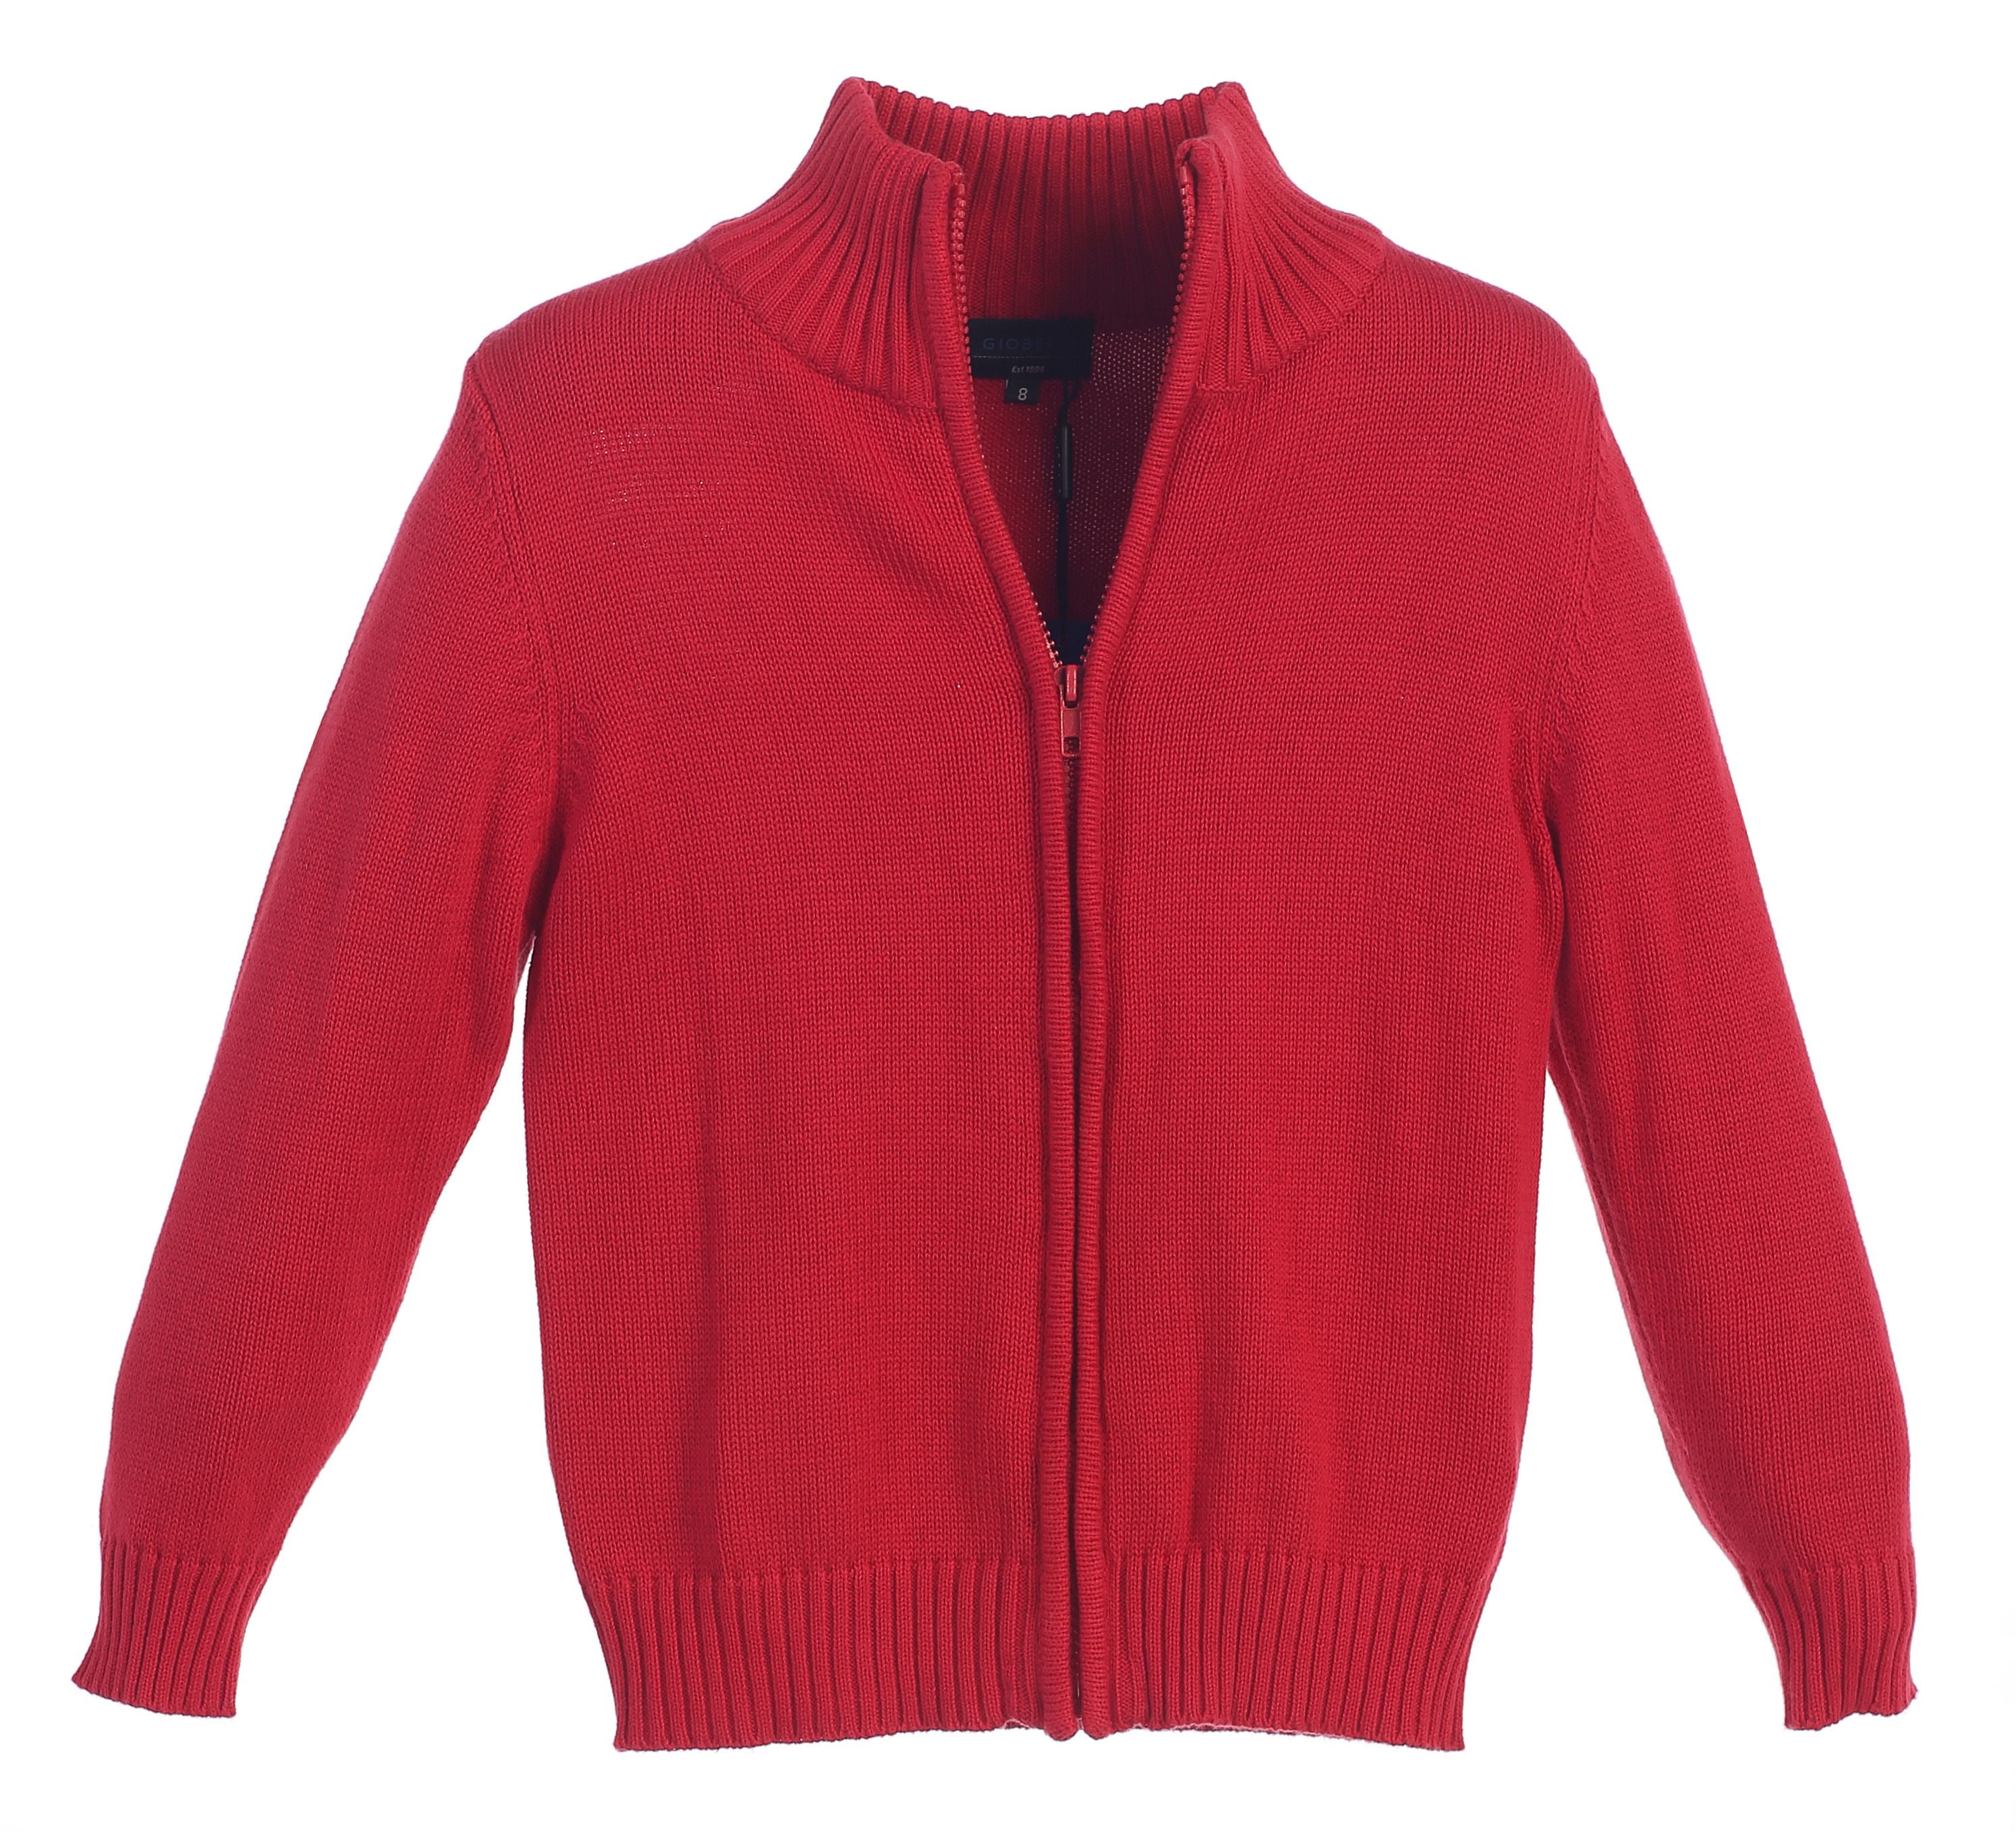 Gioberti Boys Knitted Full Zip 100% Cotton Cardigan Sweater